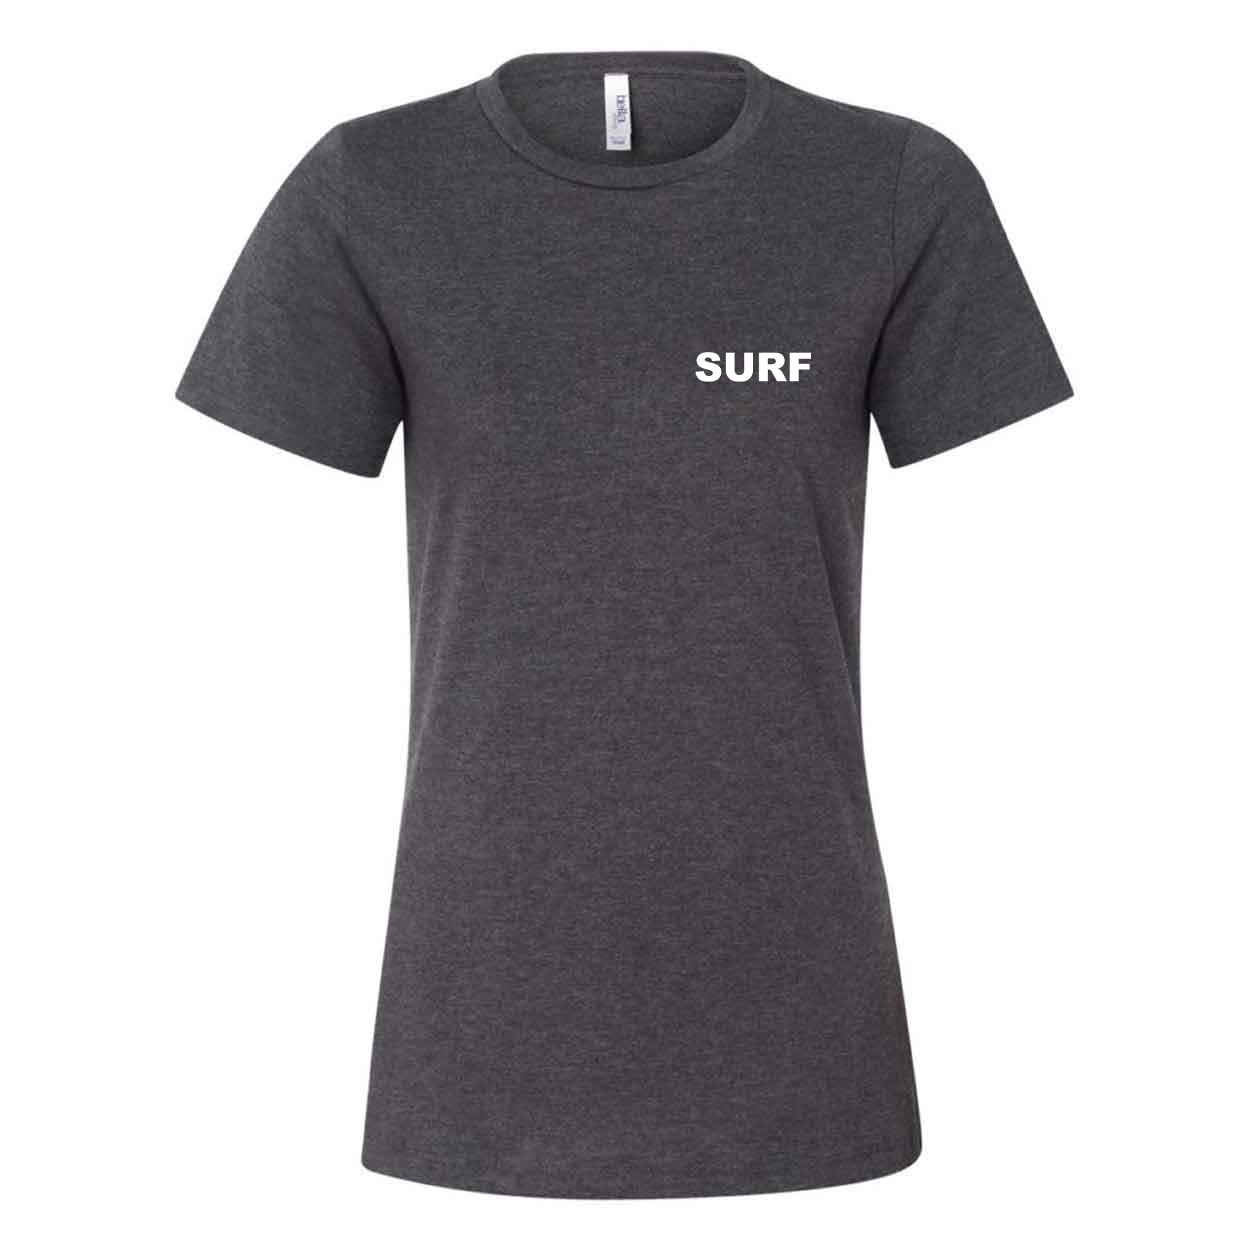 Surf Brand Logo Women's Night Out Relaxed Jersey T-Shirt Dark Gray Heather